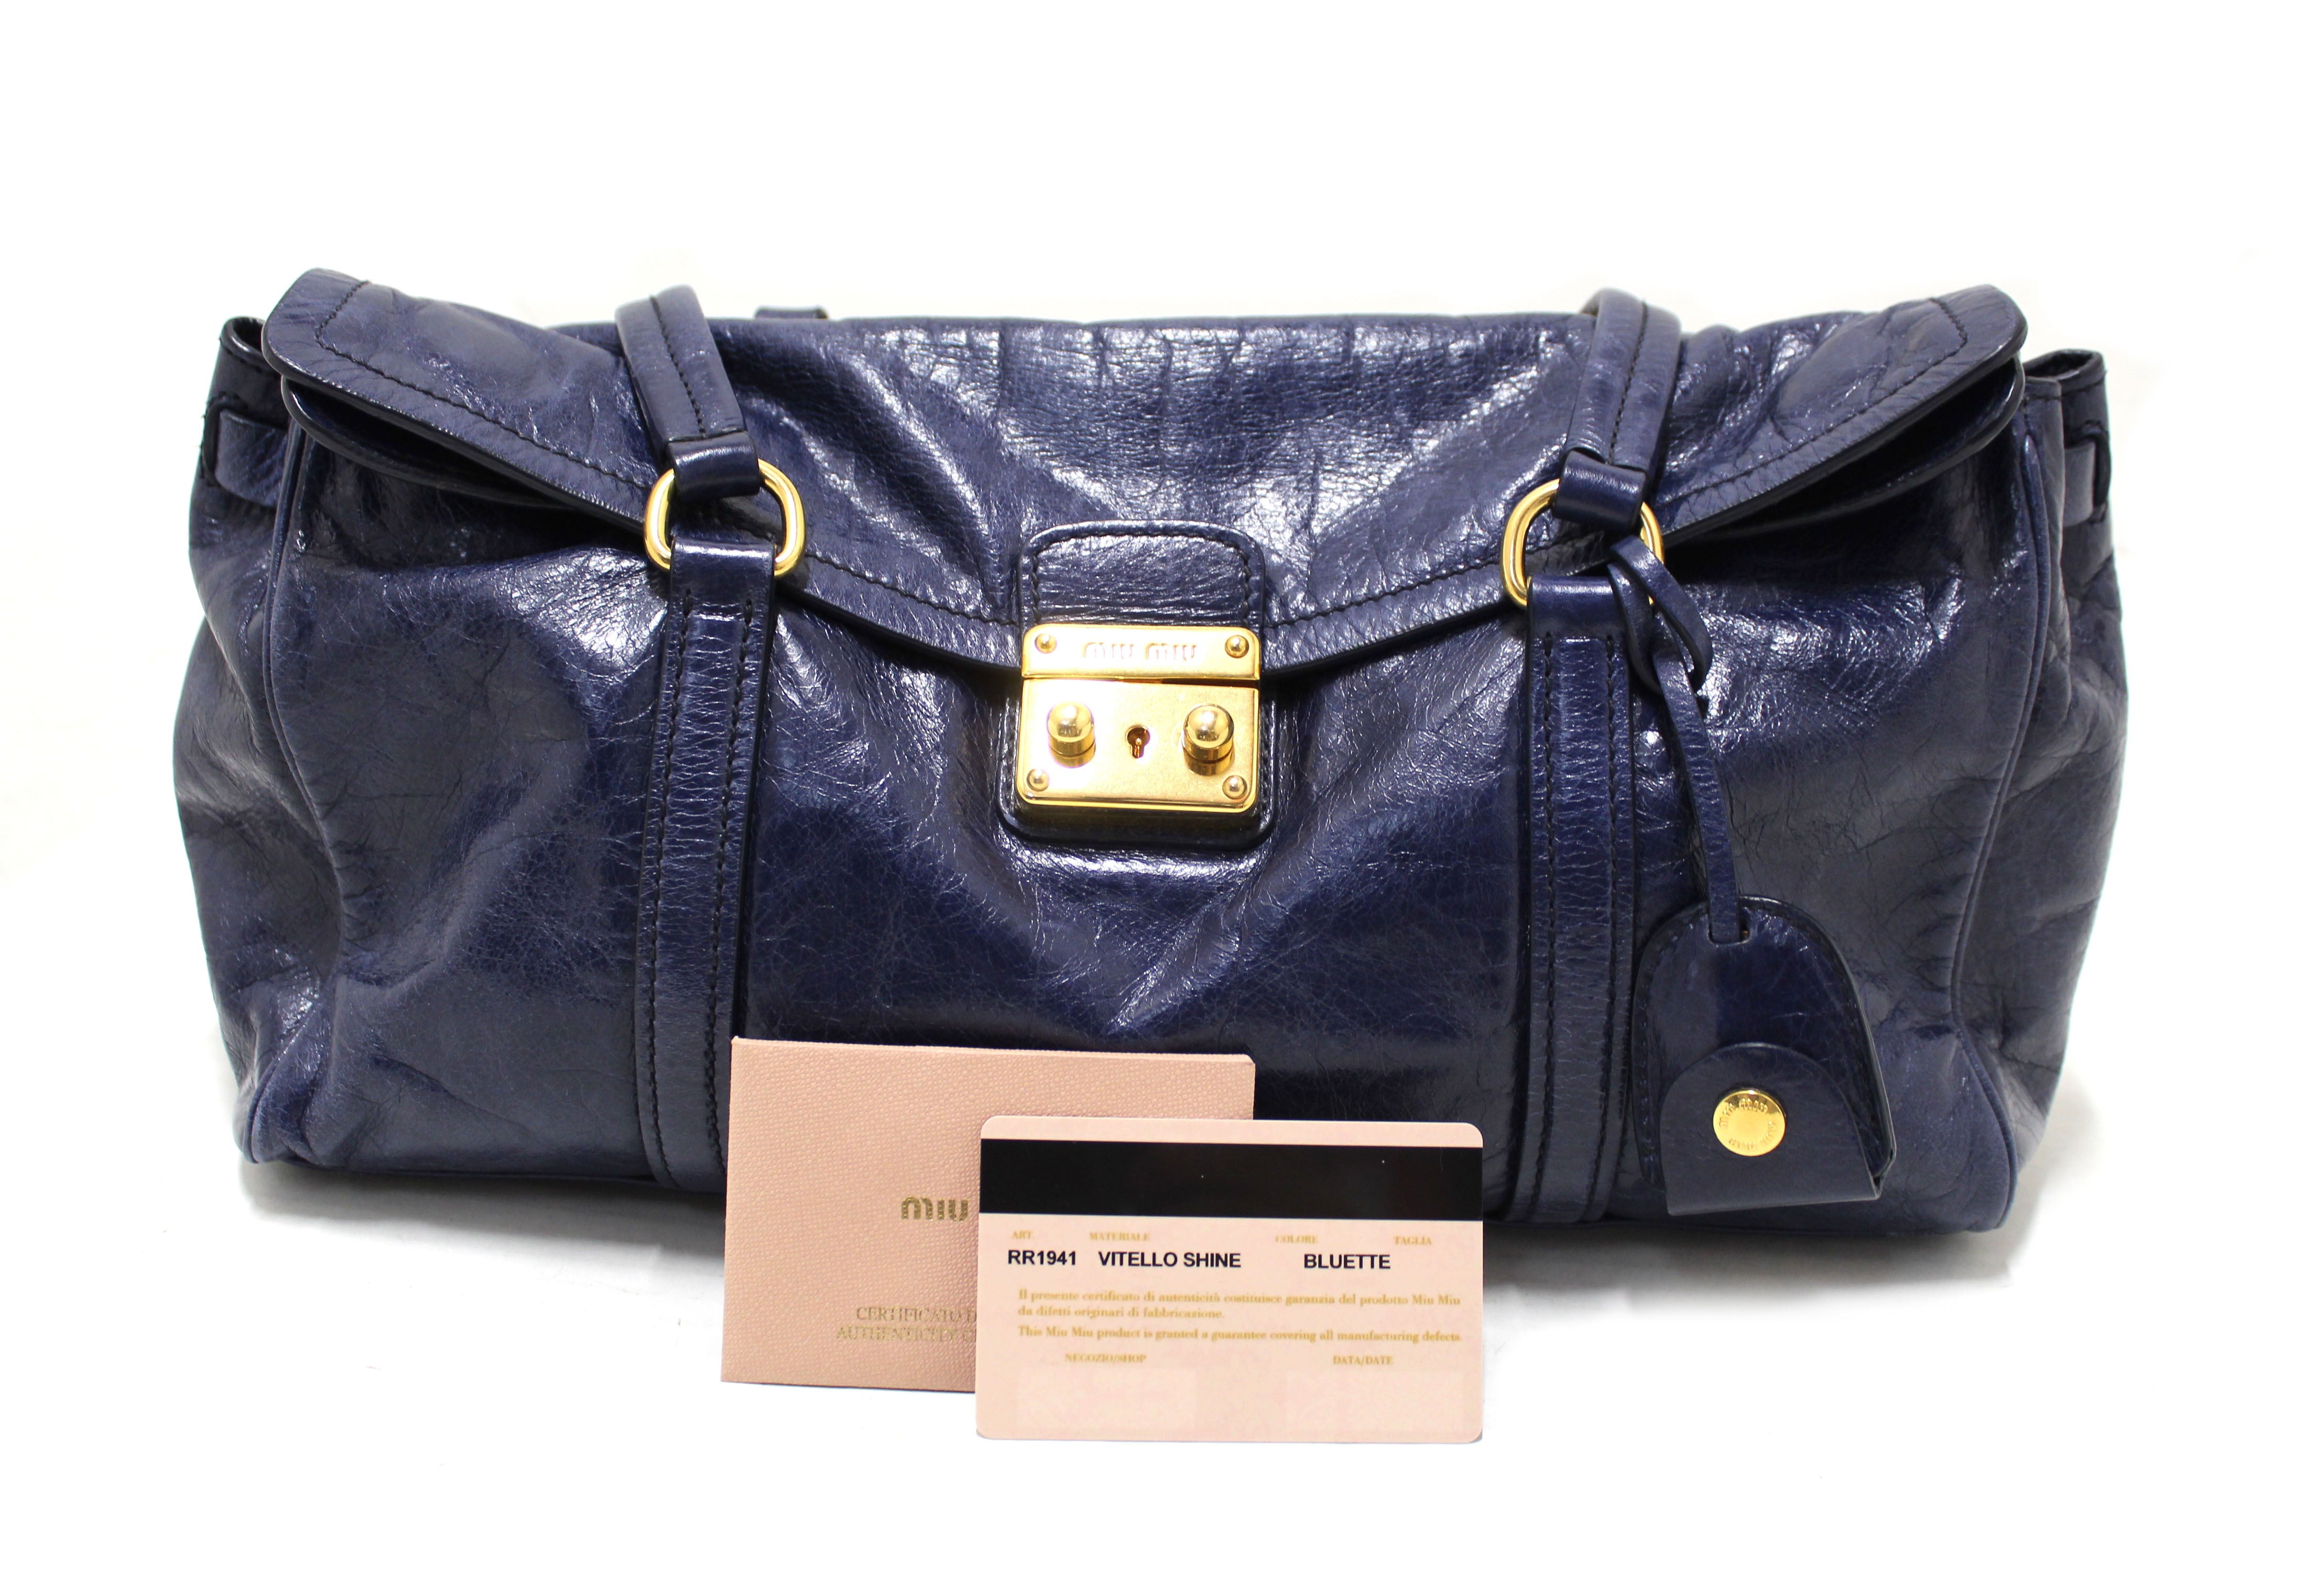 Miu Miu Vitello Lux Small Bow Satchel Hand Bag W Strap-Good Condition  &Authentic